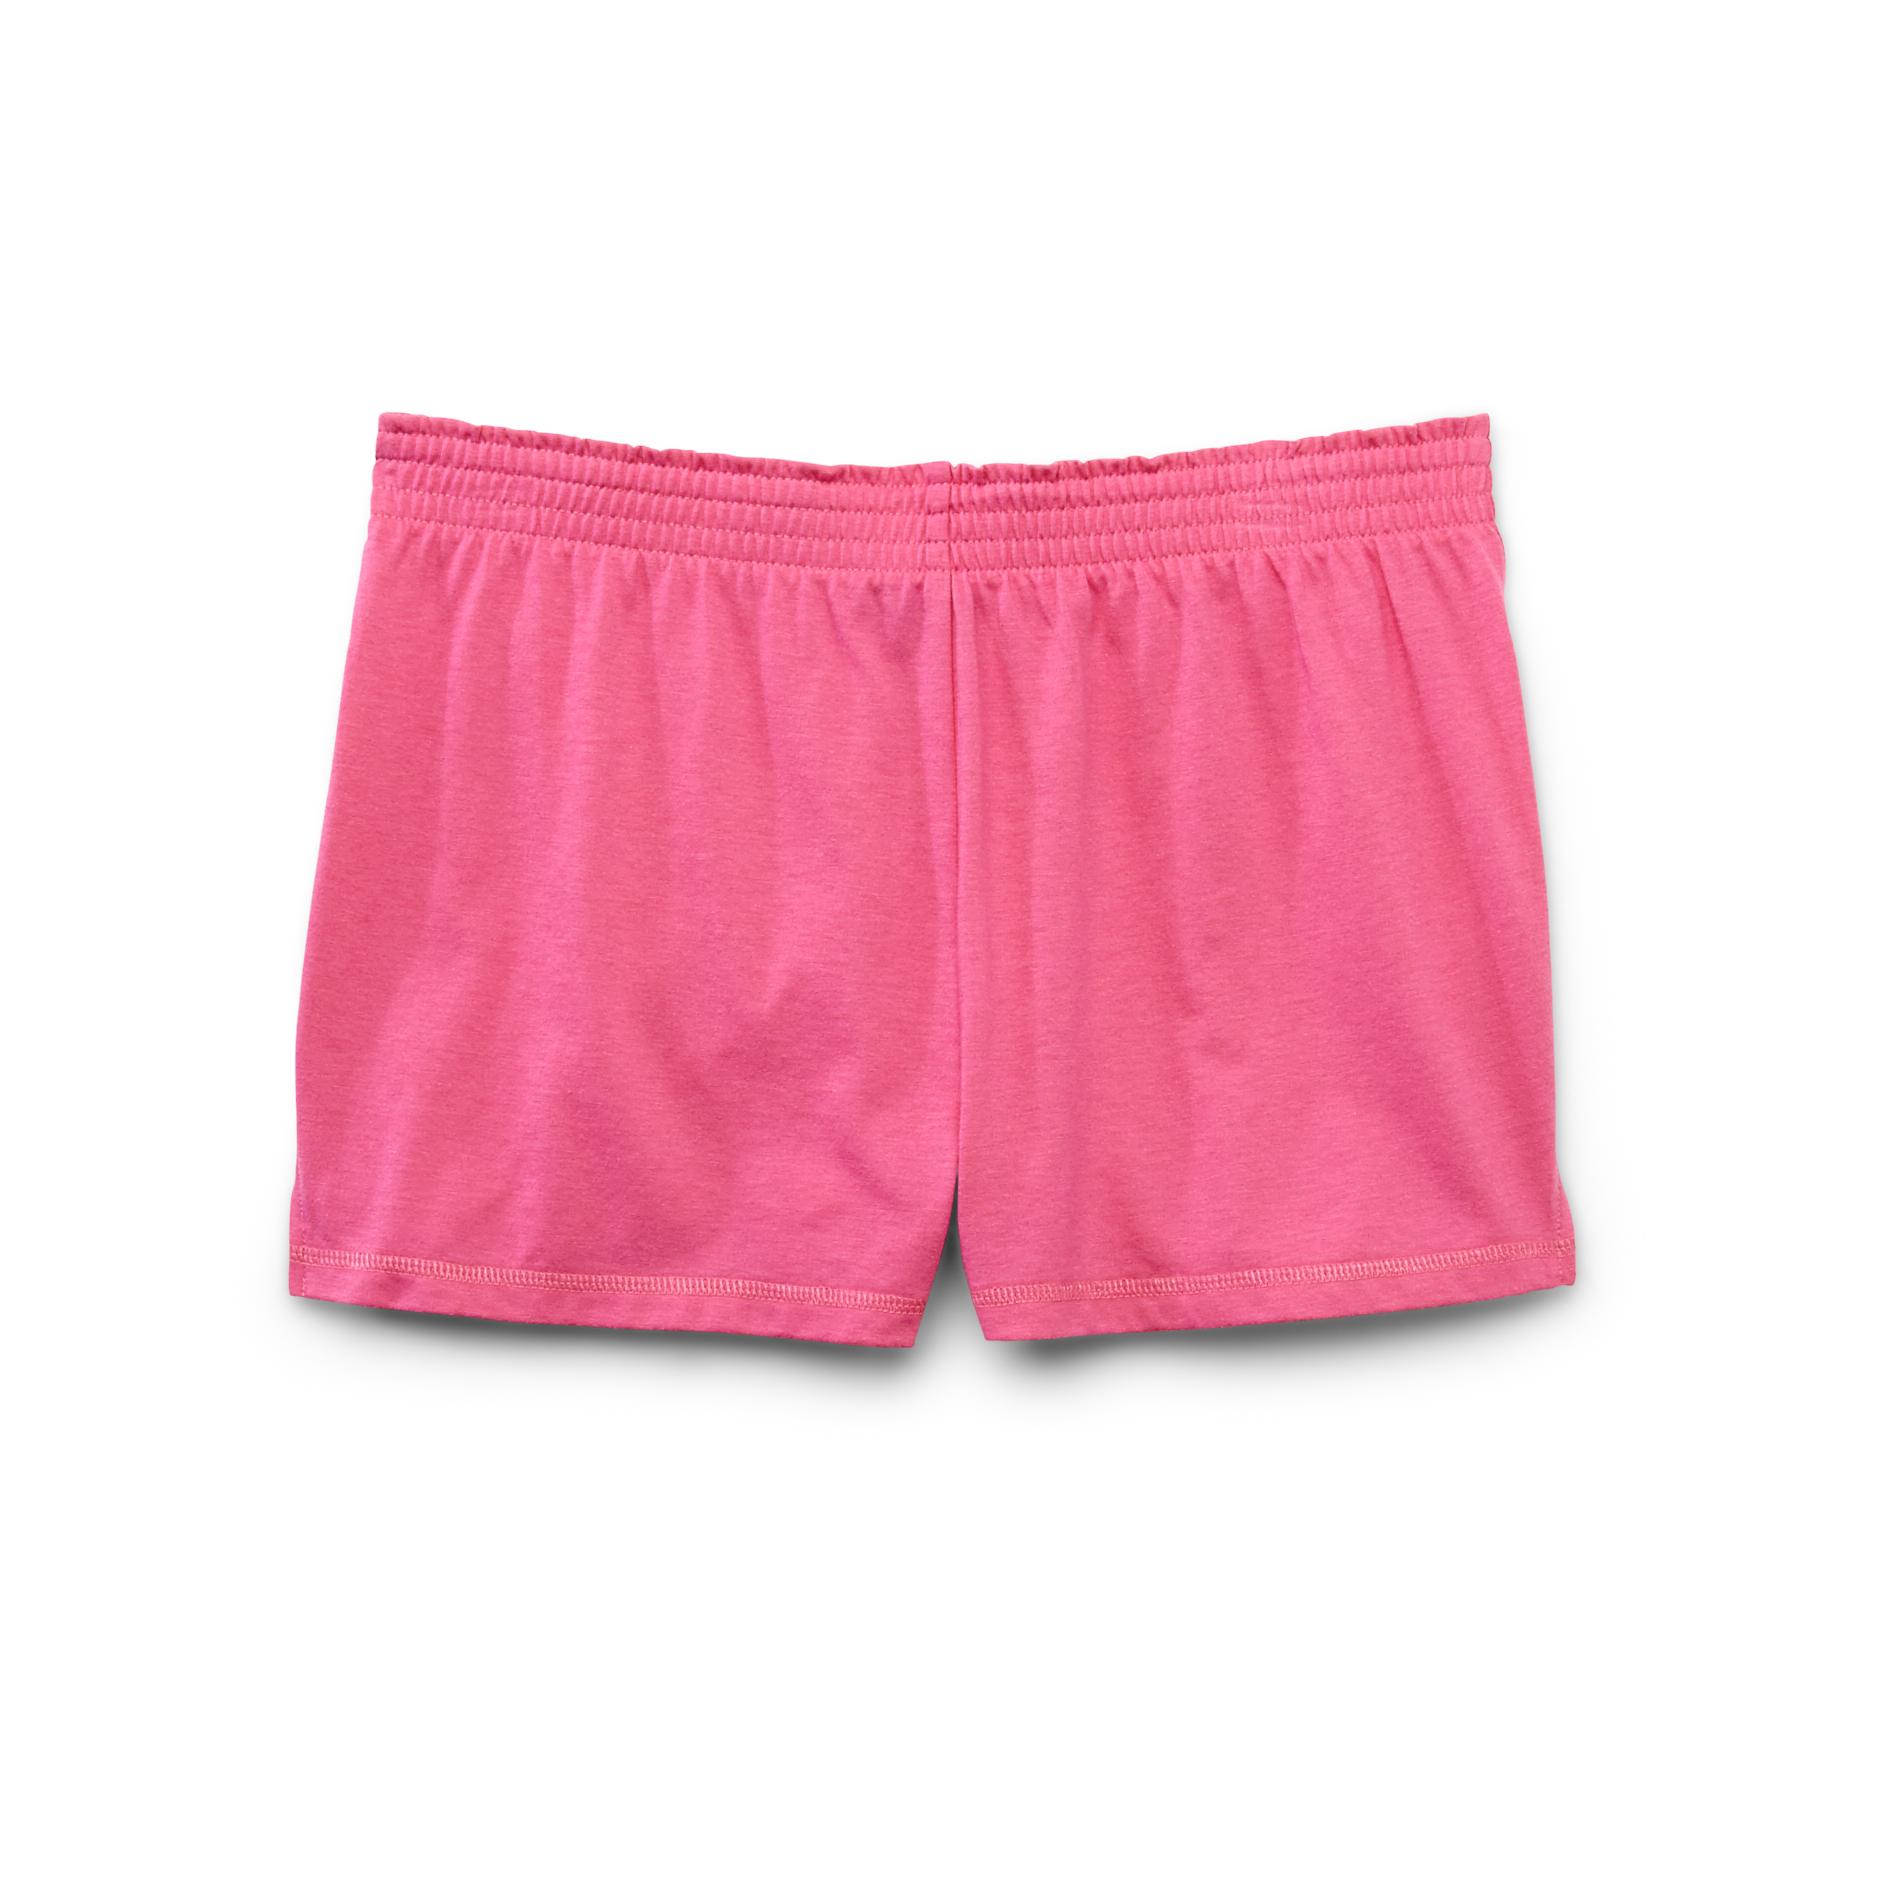 Joe Boxer Women's Two-Tone Basic Knit Shorts